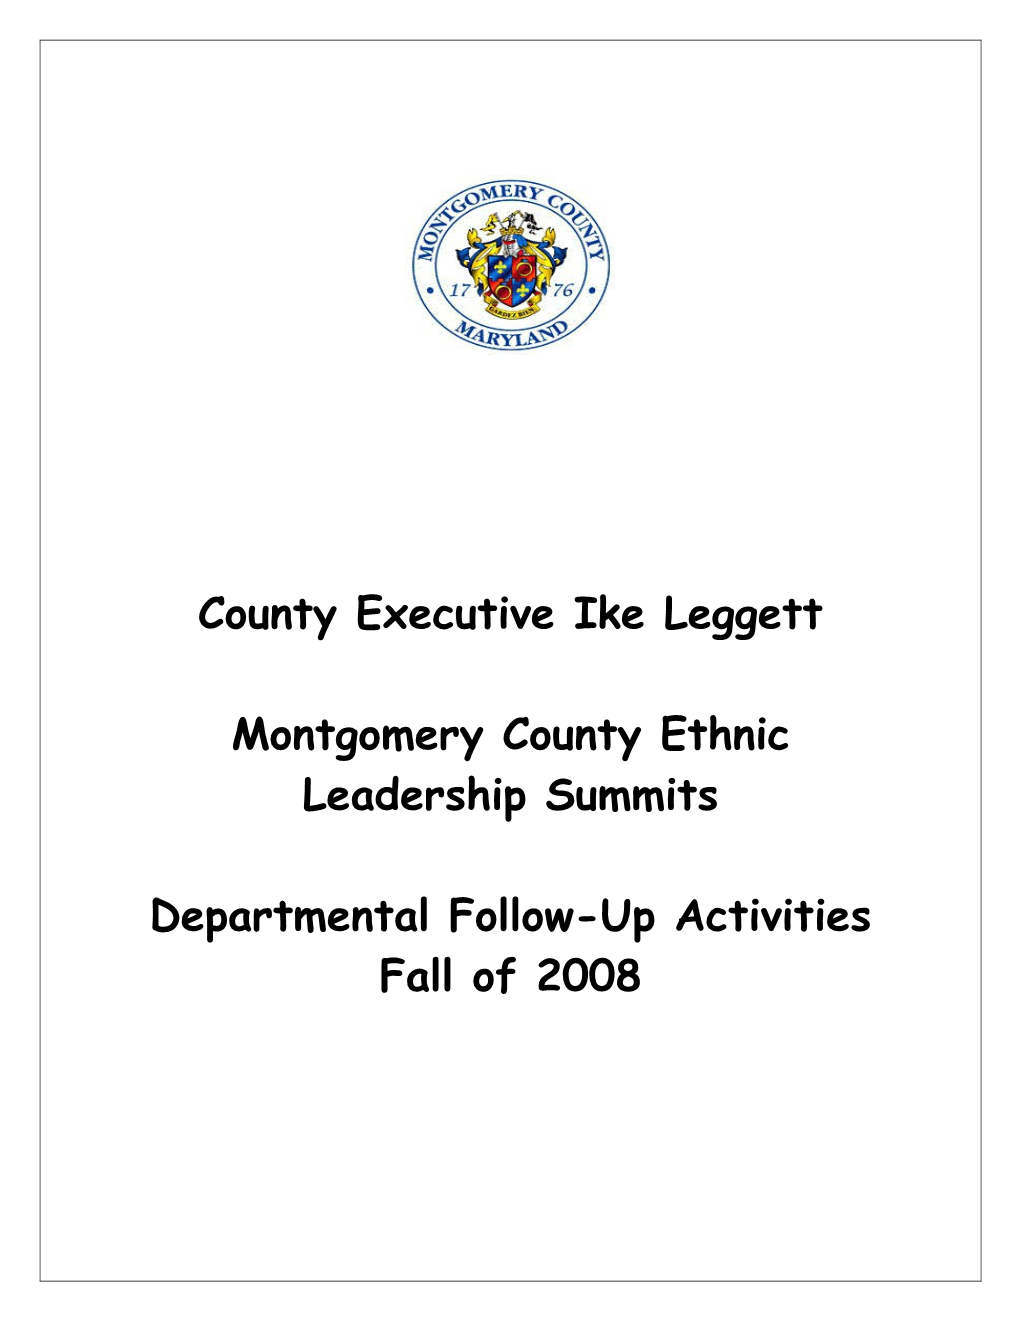 Montgomery County Ethnic Leadership Summits